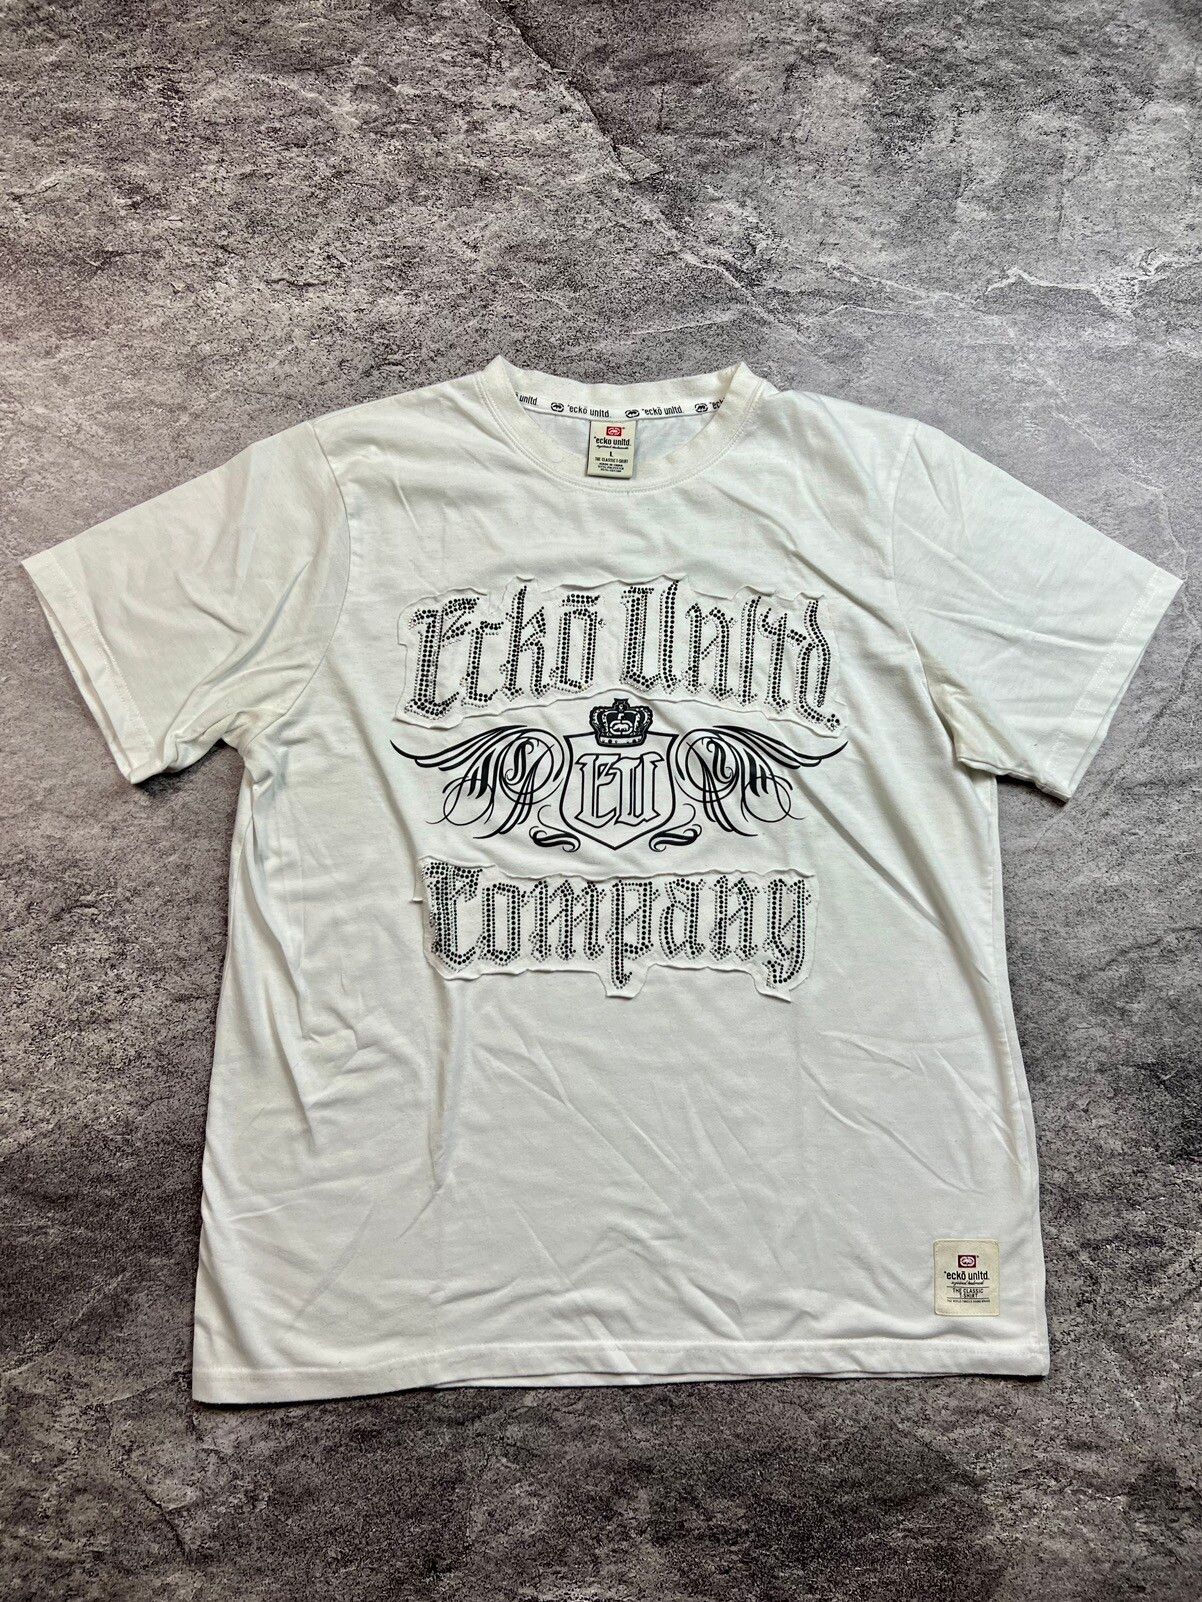 Pre-owned Ecko Unltd X Vintage Y2k Ecko Unltd Rhinestone Hip Hop Rap Japan Swag Style Tee In White